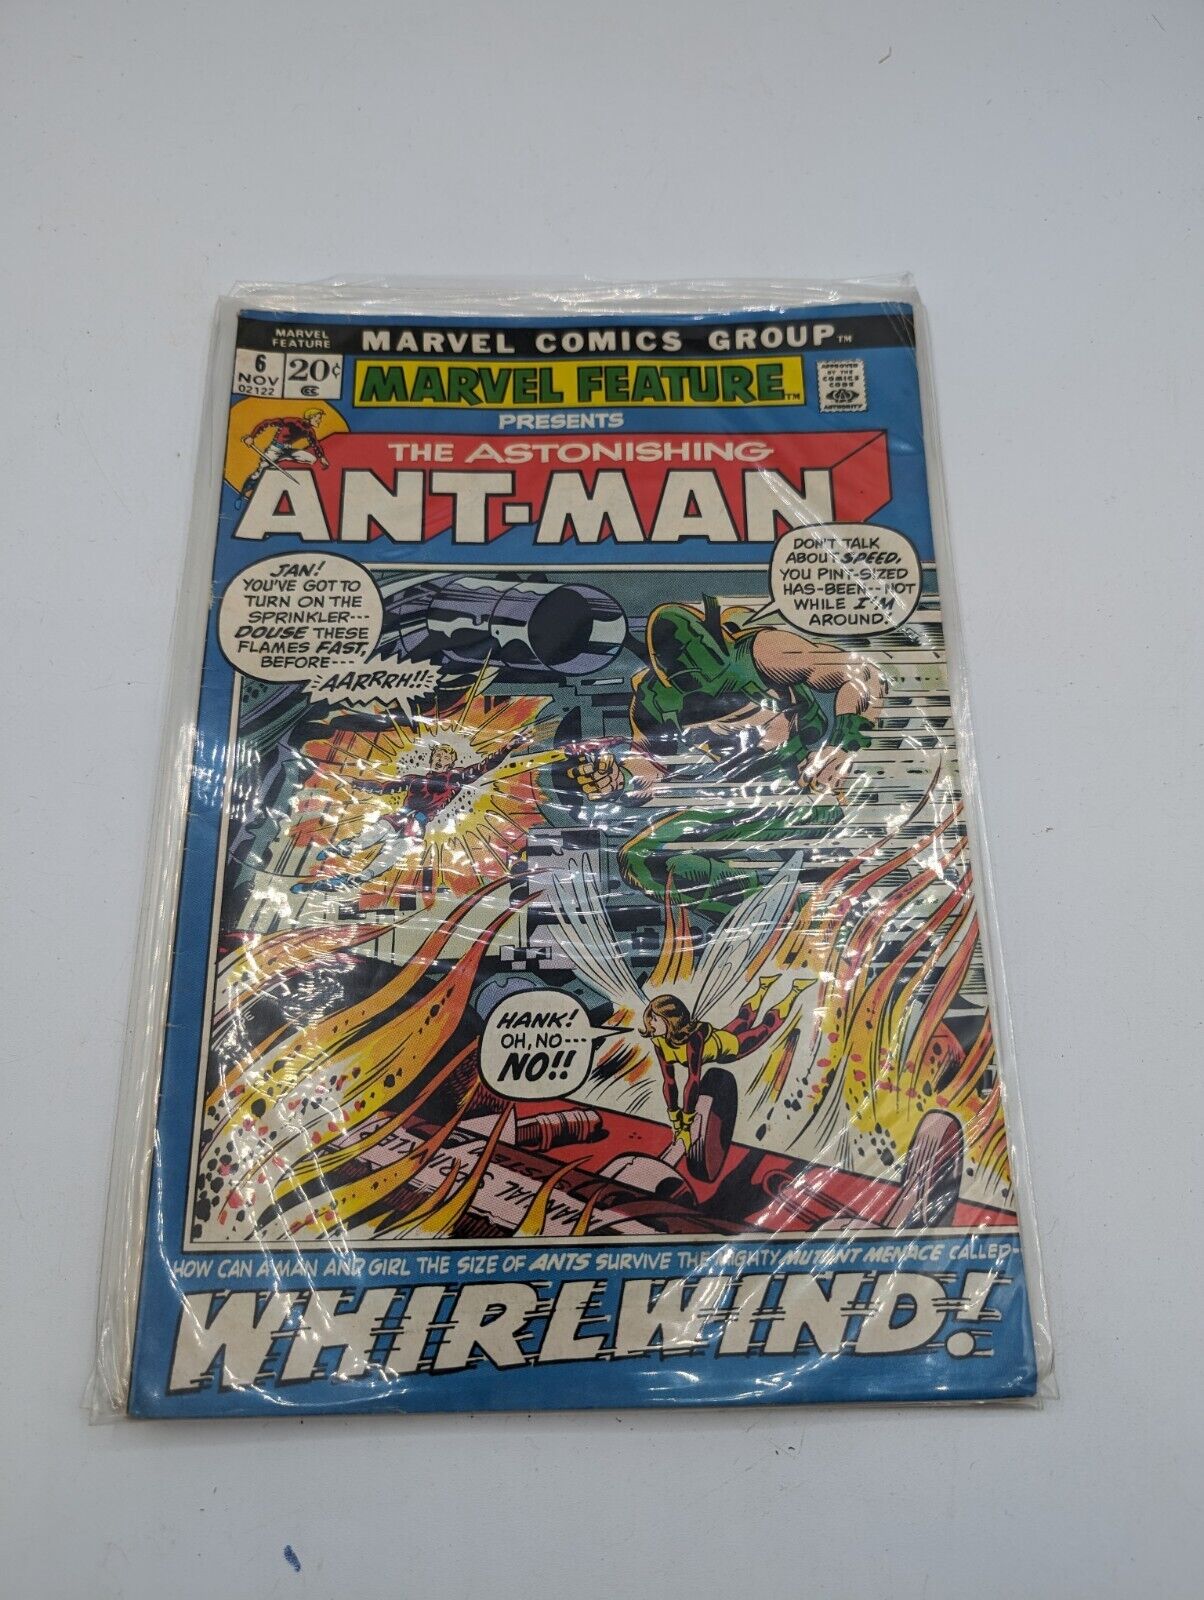 The Astonishing Ant-Man #6 (Marvel Comics, 1972)